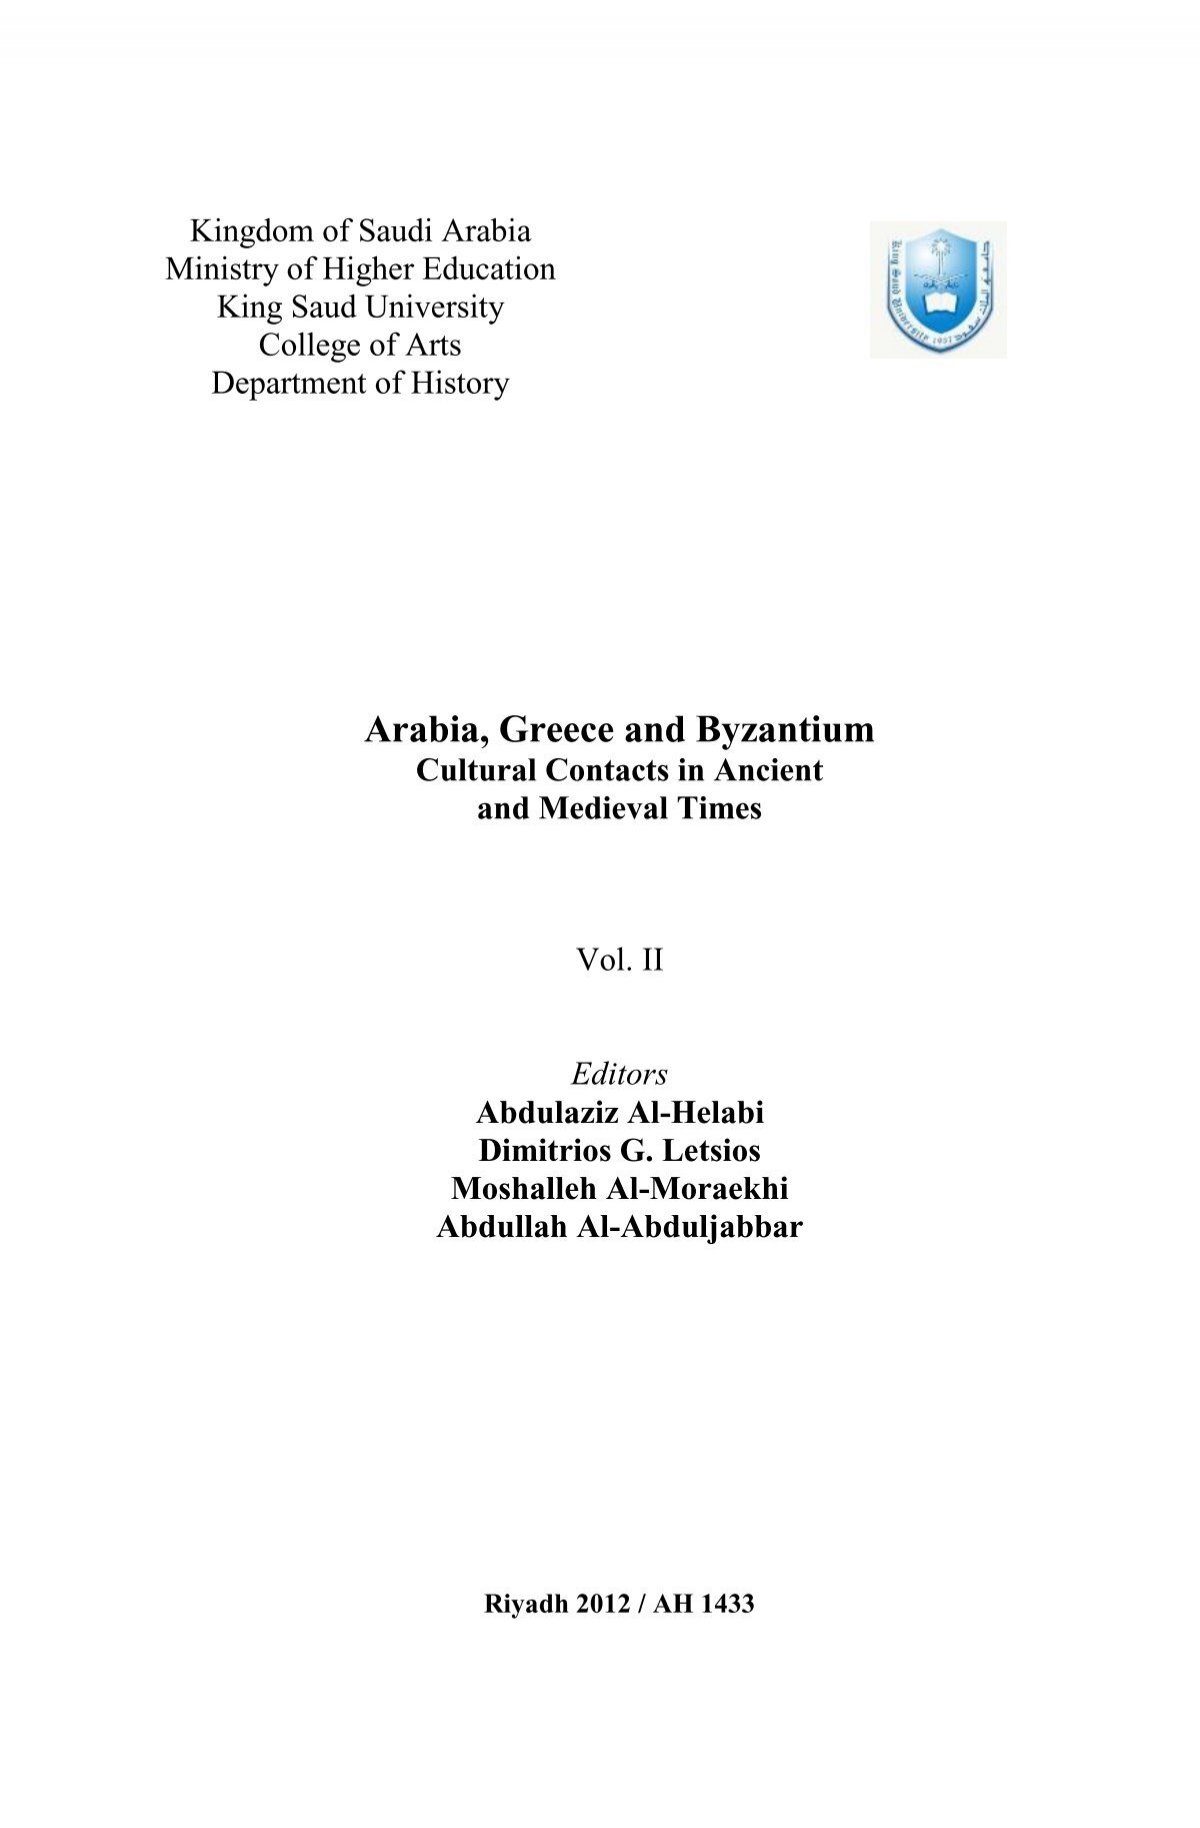 arabia greece and byzantium